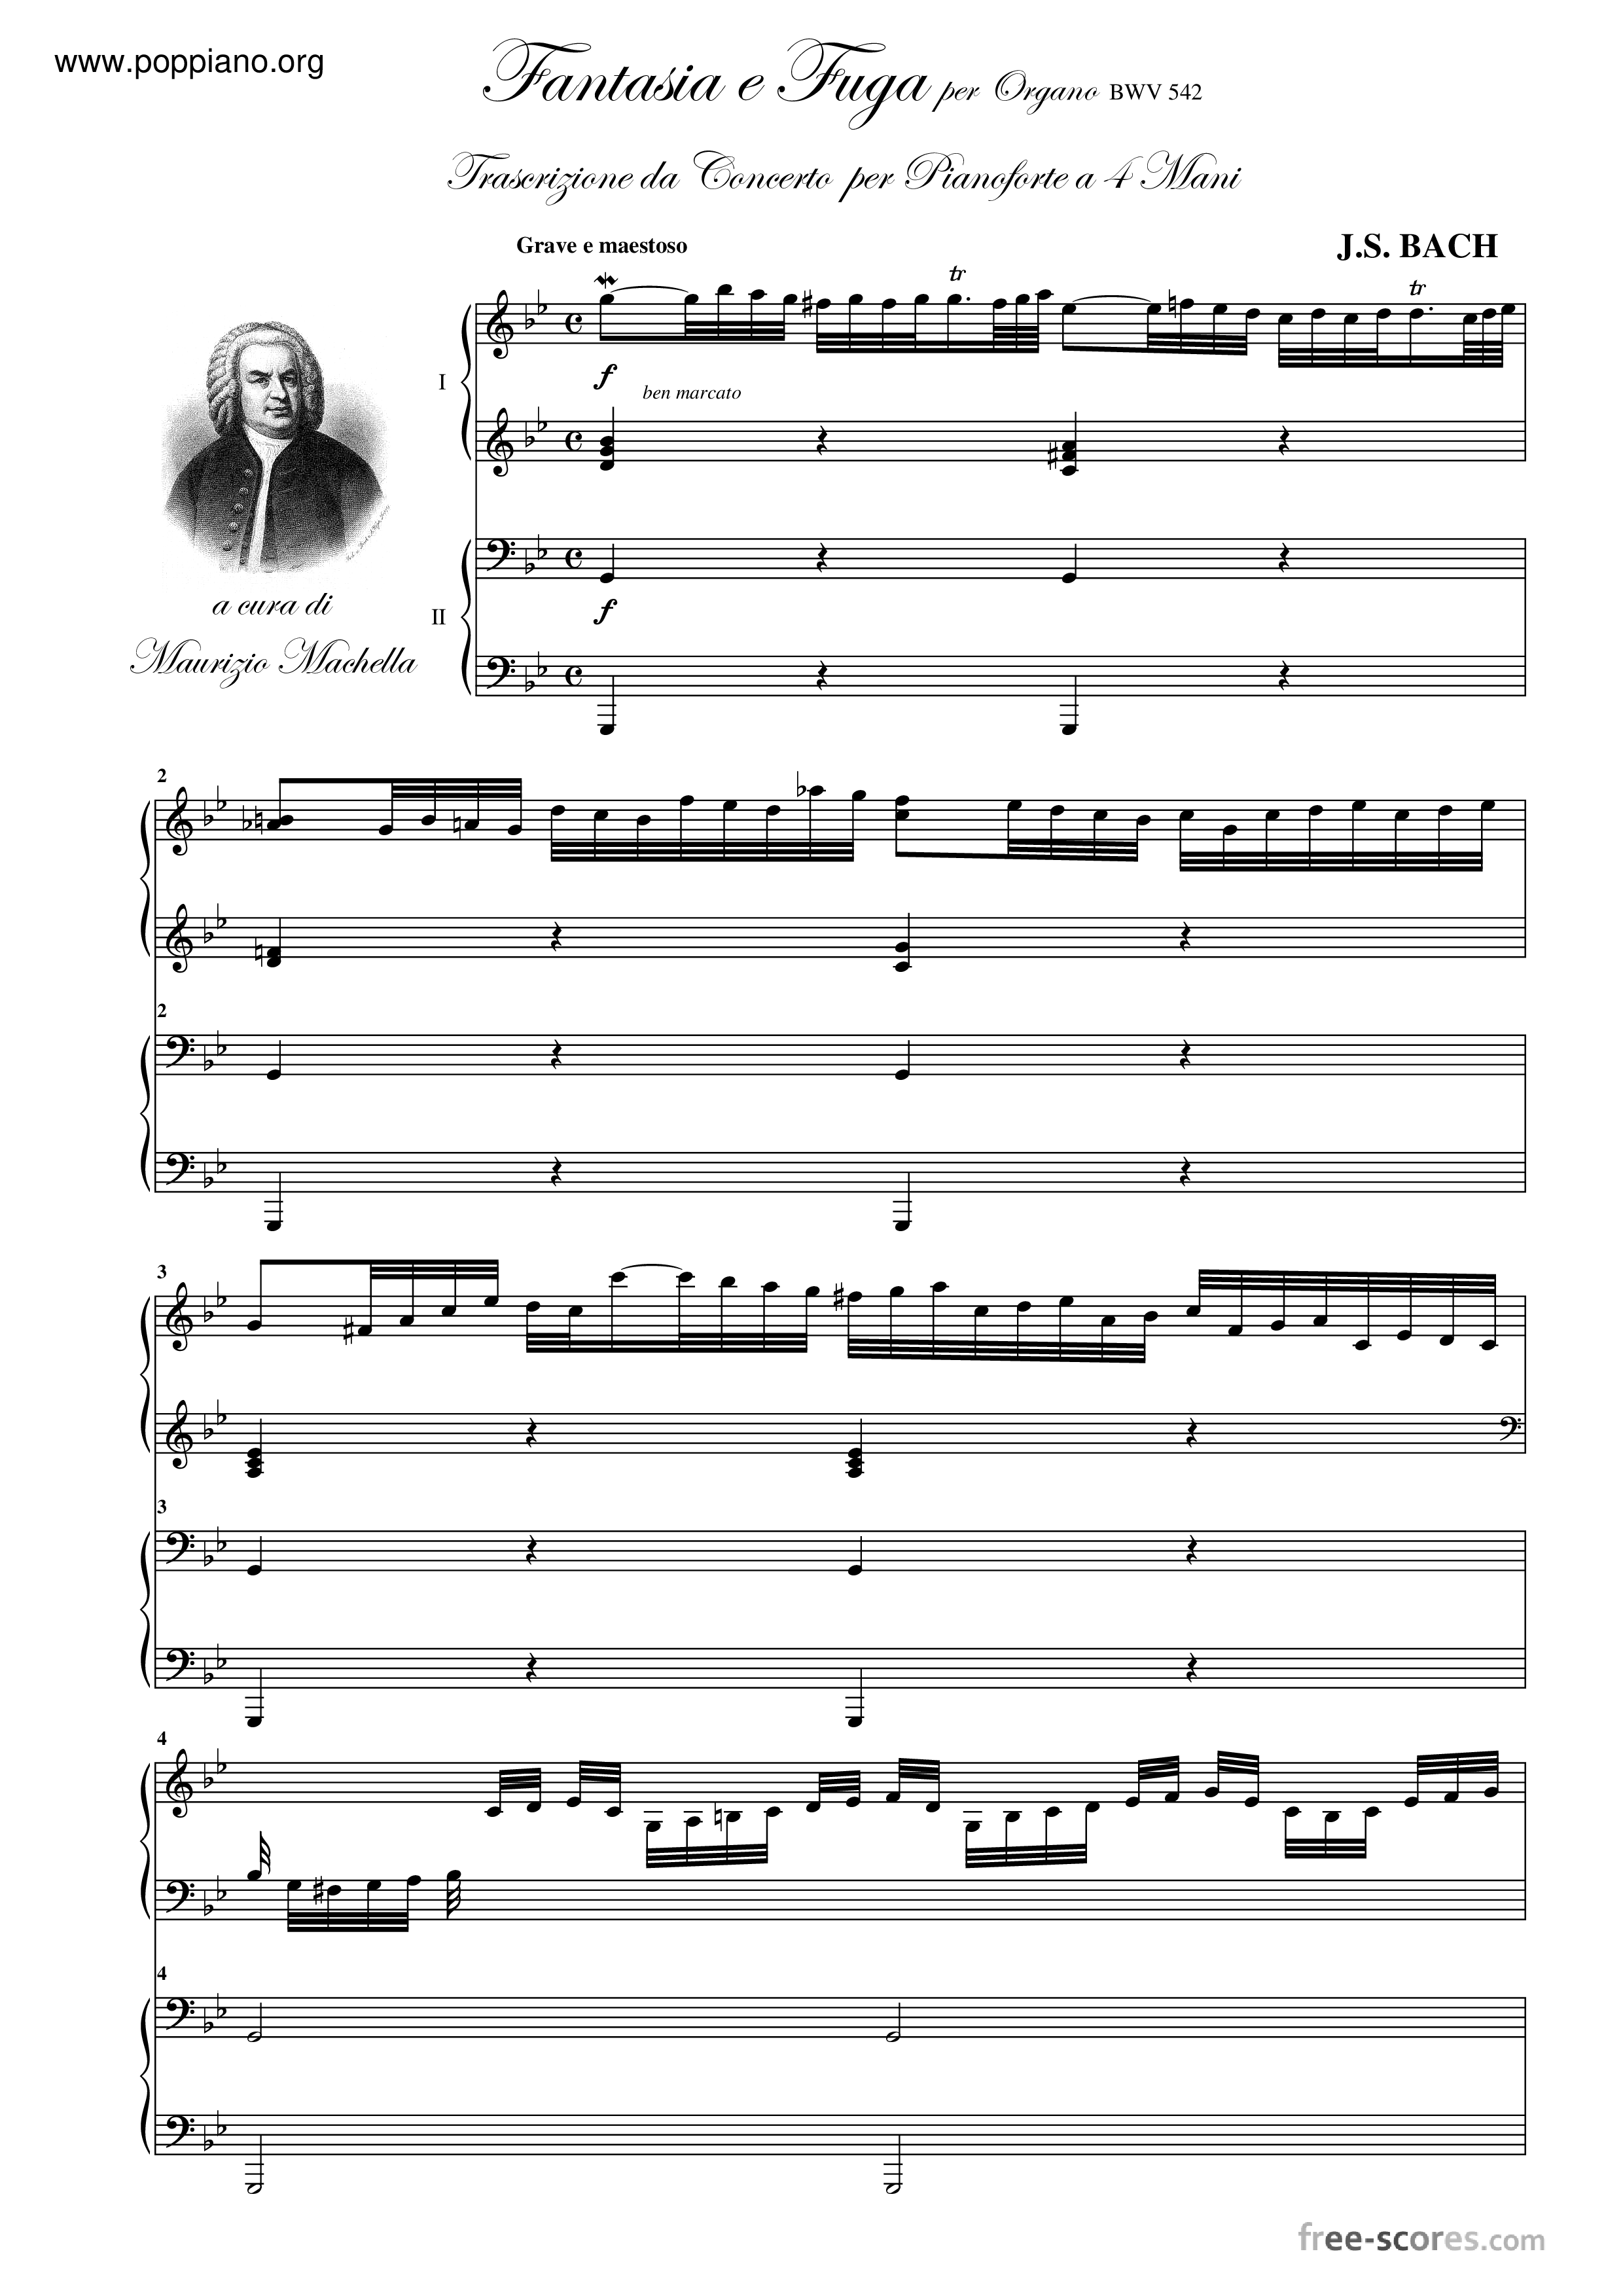 Fantasia and Fugue in G minor, BWV 542ピアノ譜